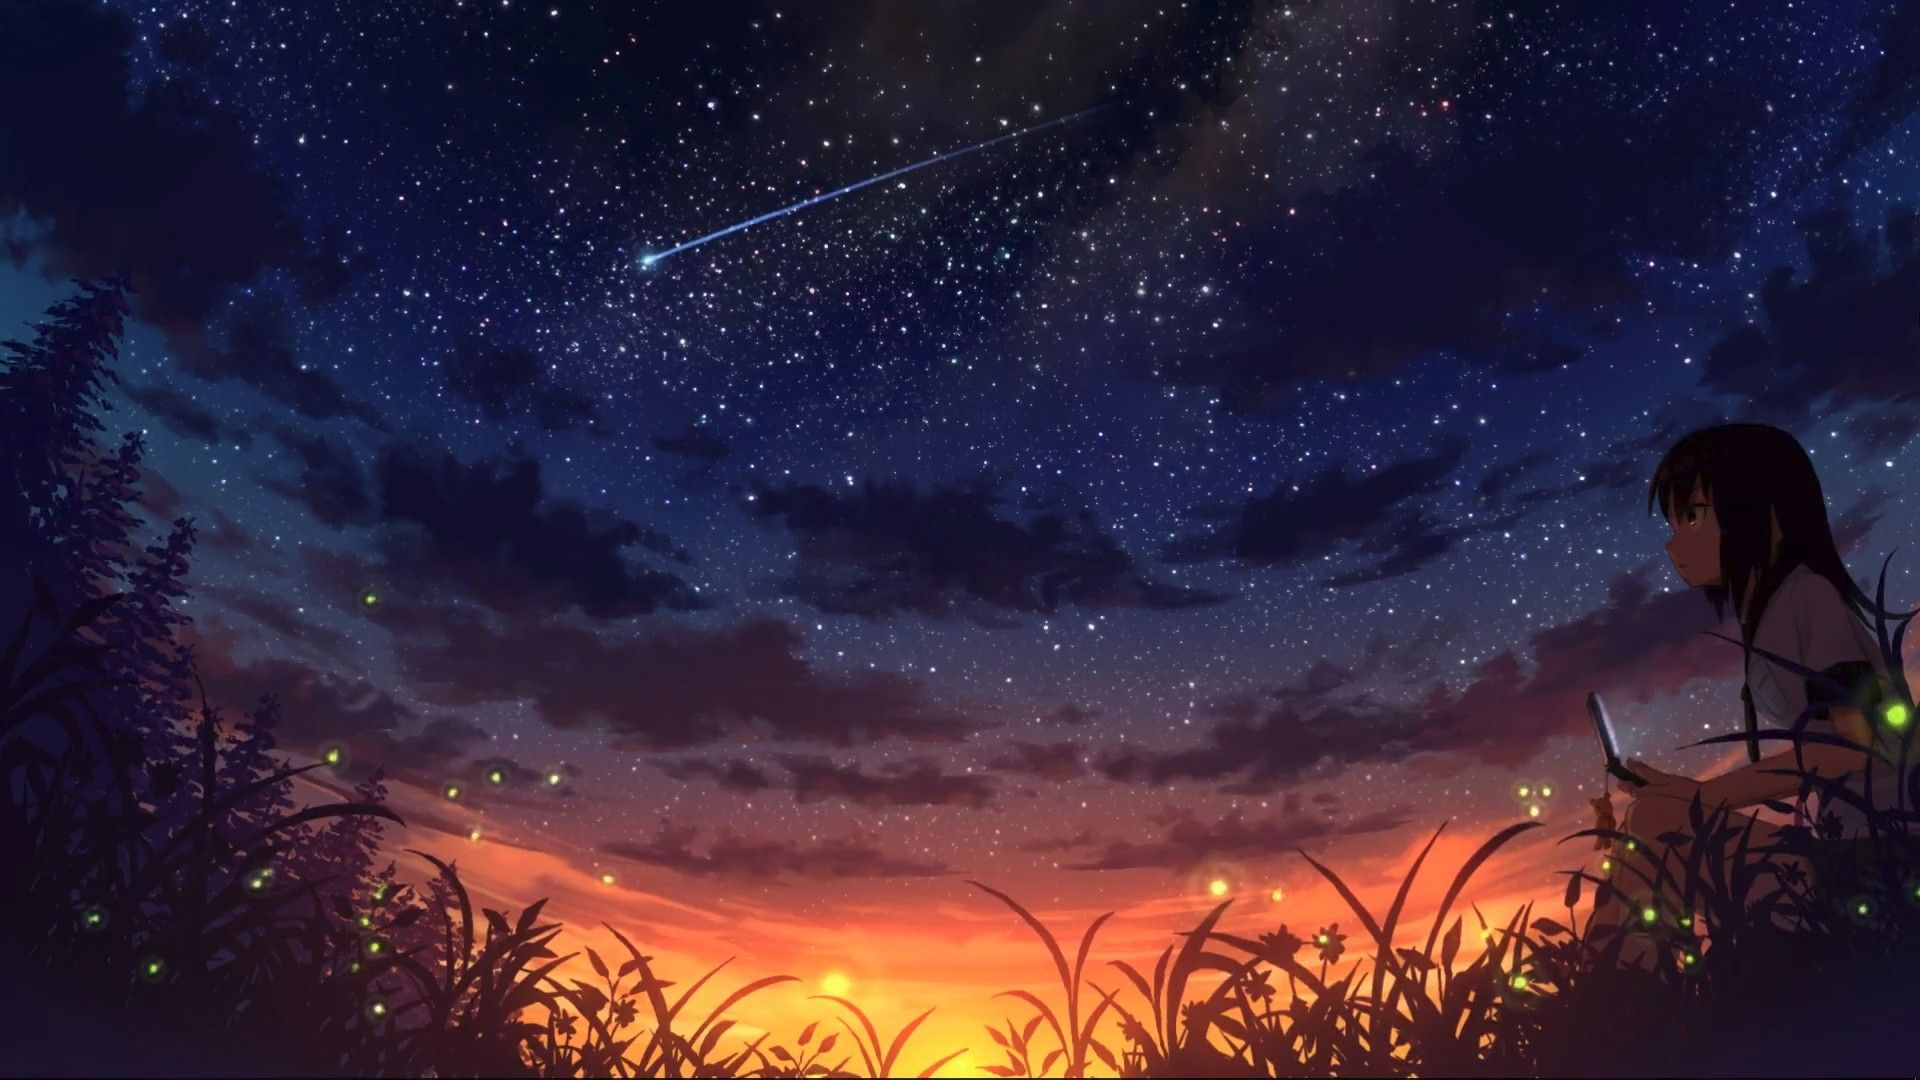 Anime Scenery Wallpaper: 28 Image